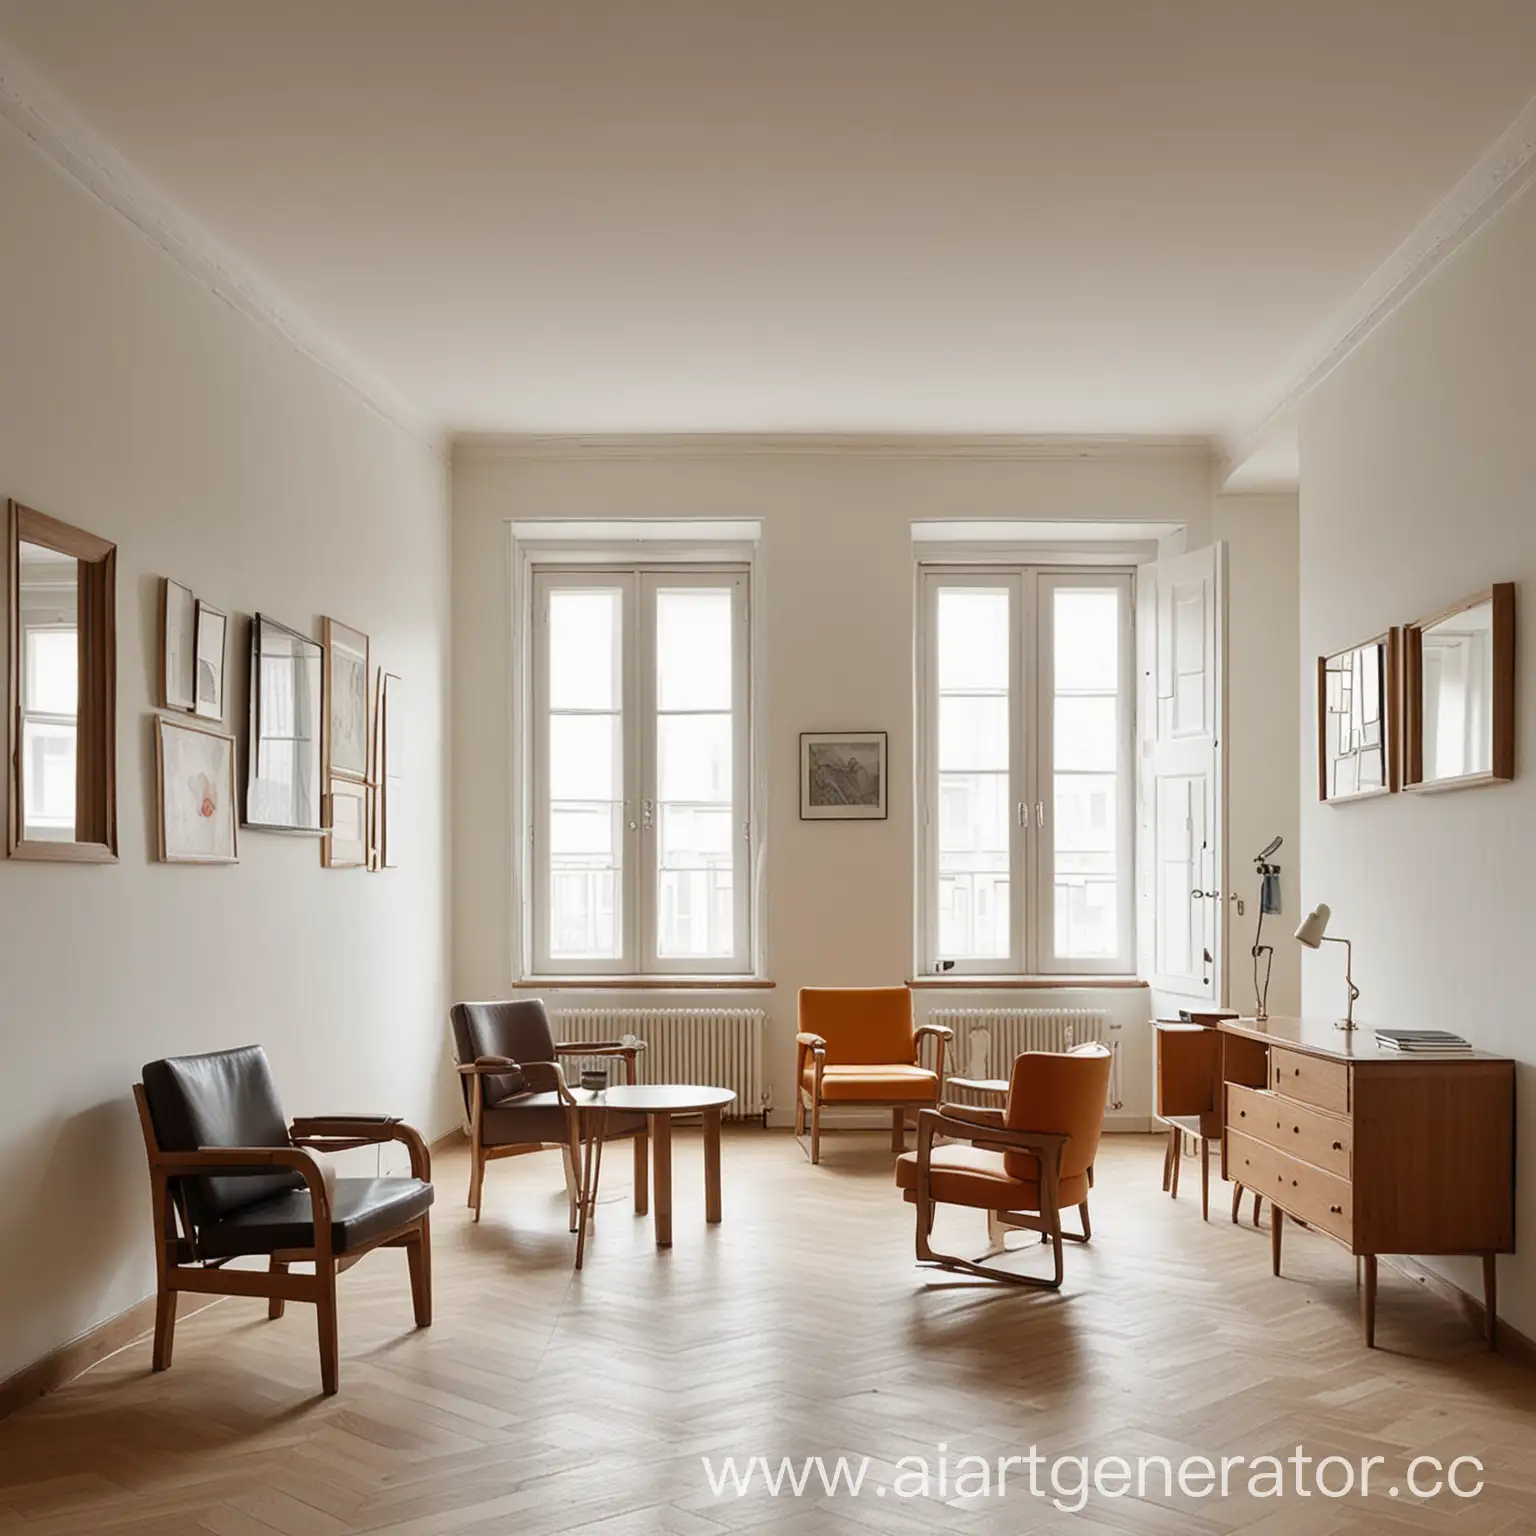 Interior-Design-of-BauhausInspired-Creative-Mood-Disorder-Treatment-Center